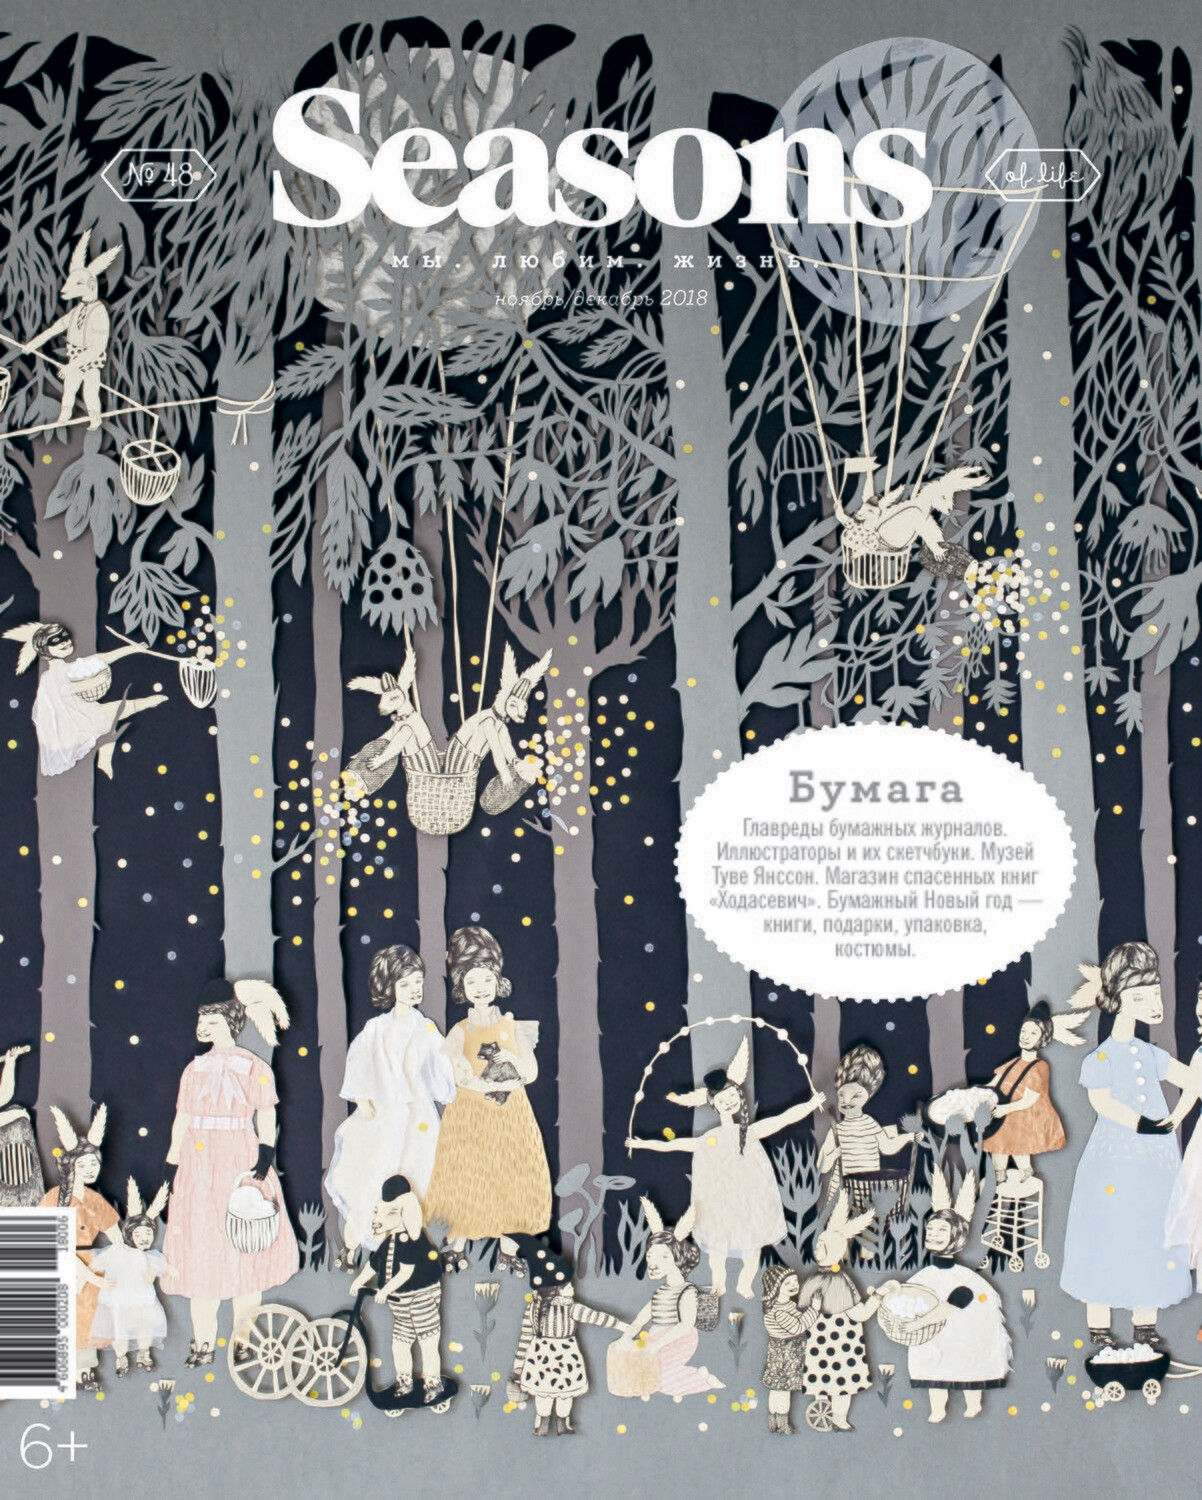 Сизонс журнал. Seasons журнал. Seasons of Life журнал. Журнал Сизонс обложки. Seasons шурнала.